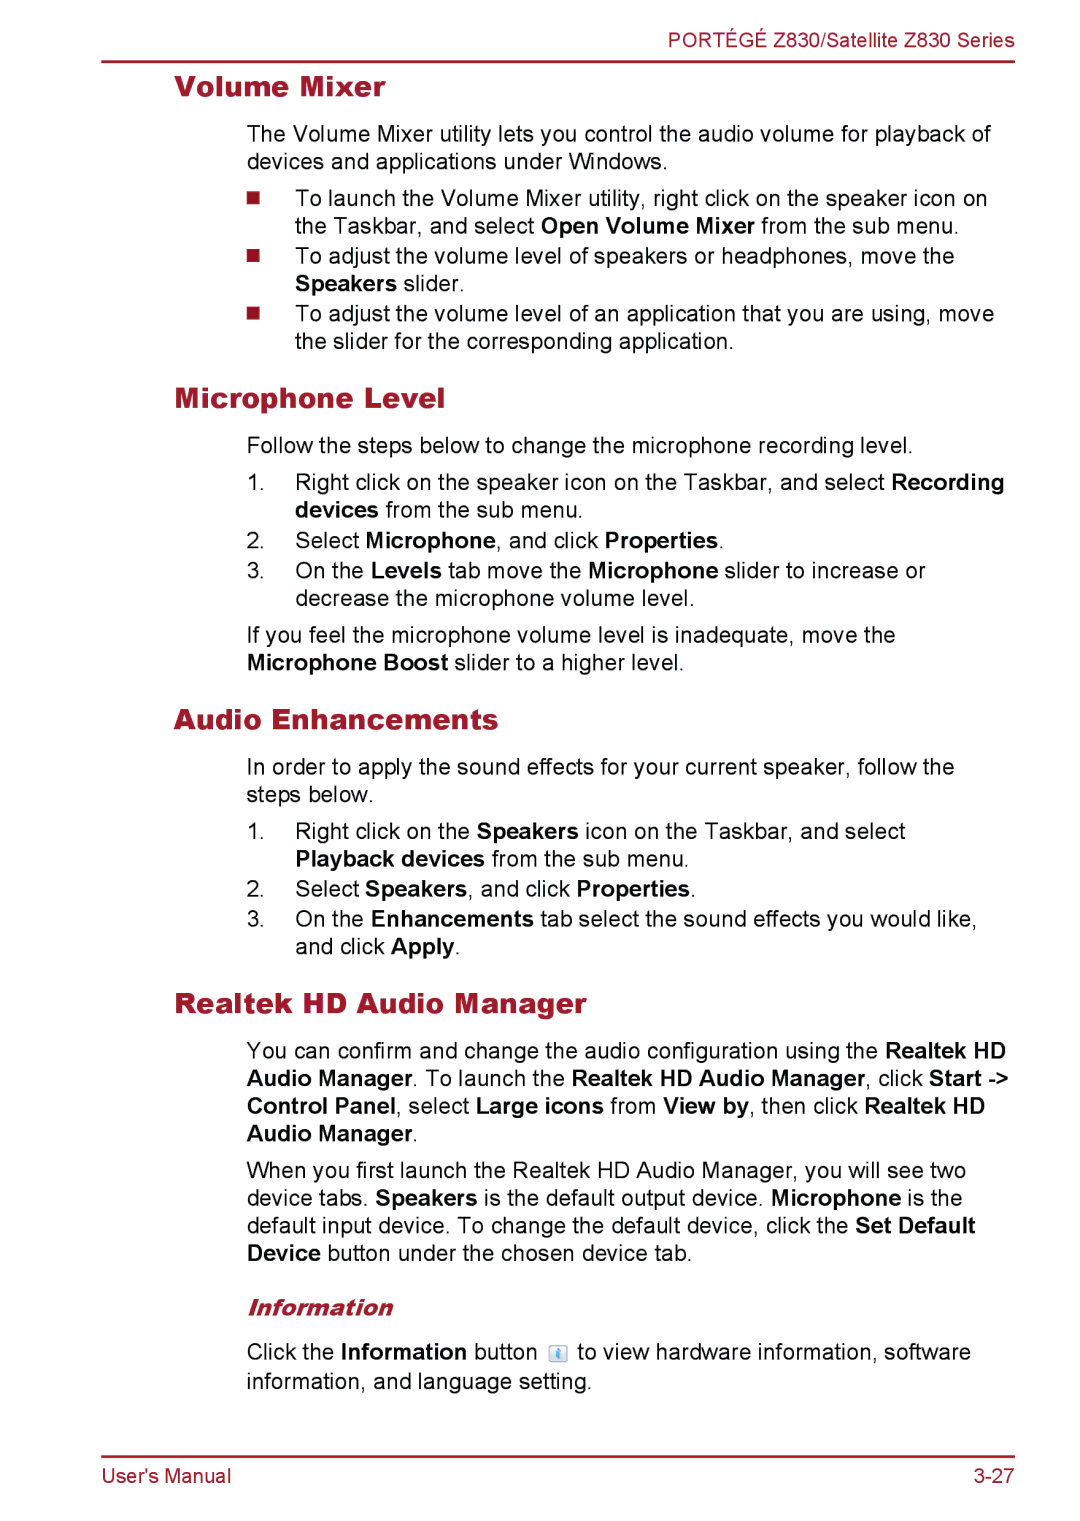 Toshiba Z830 user manual Volume Mixer, Microphone Level, Audio Enhancements, Realtek HD Audio Manager, Information 